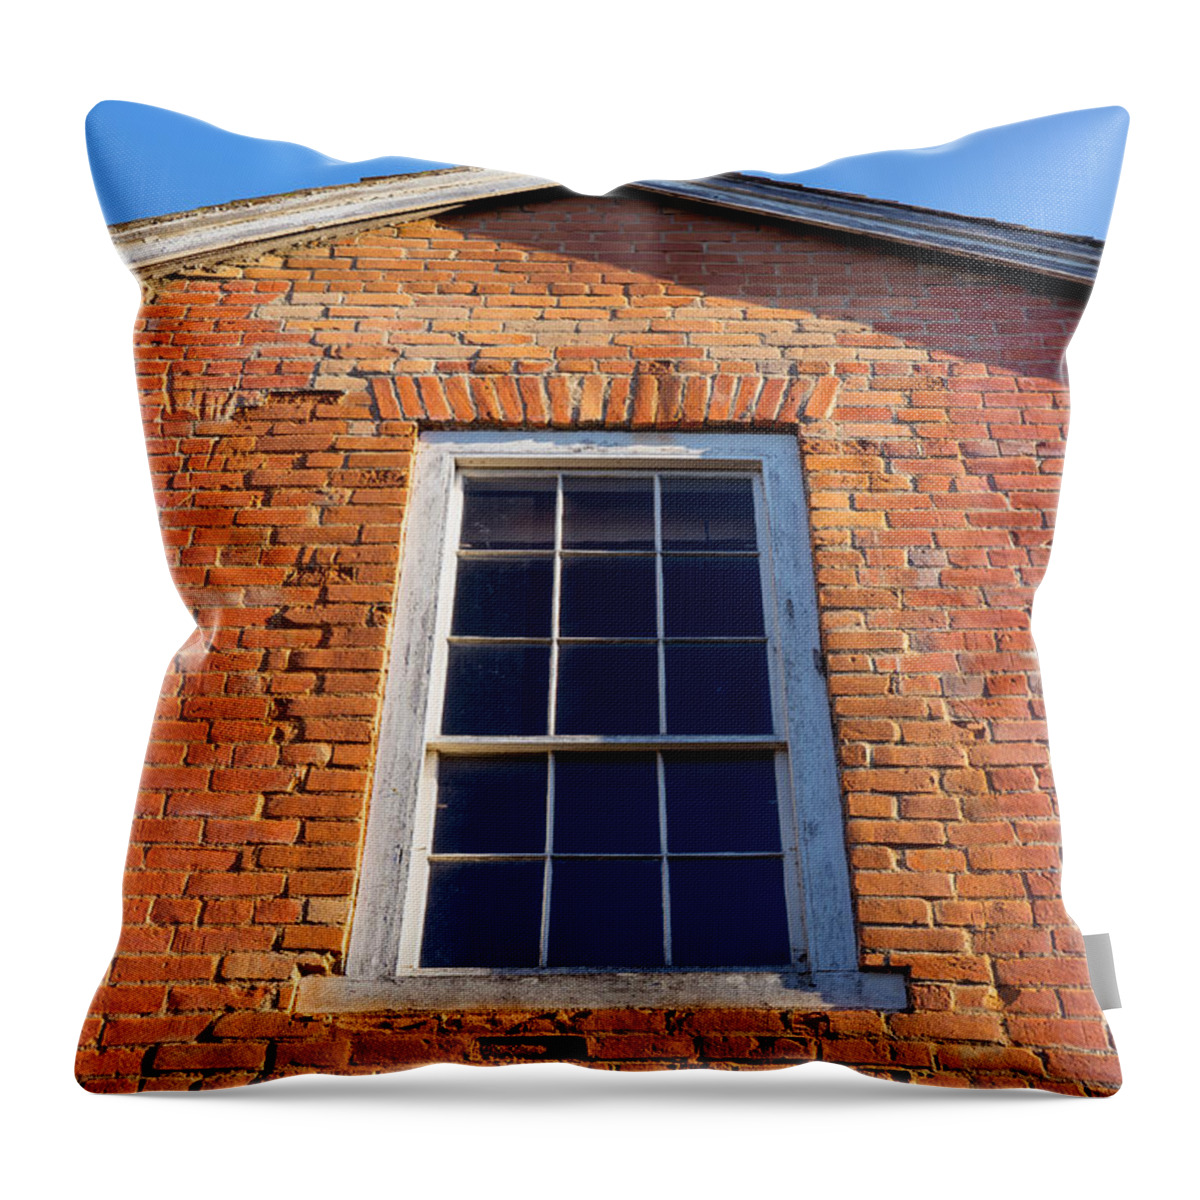 Brick House Throw Pillow featuring the photograph Brick House Window by Derek Dean